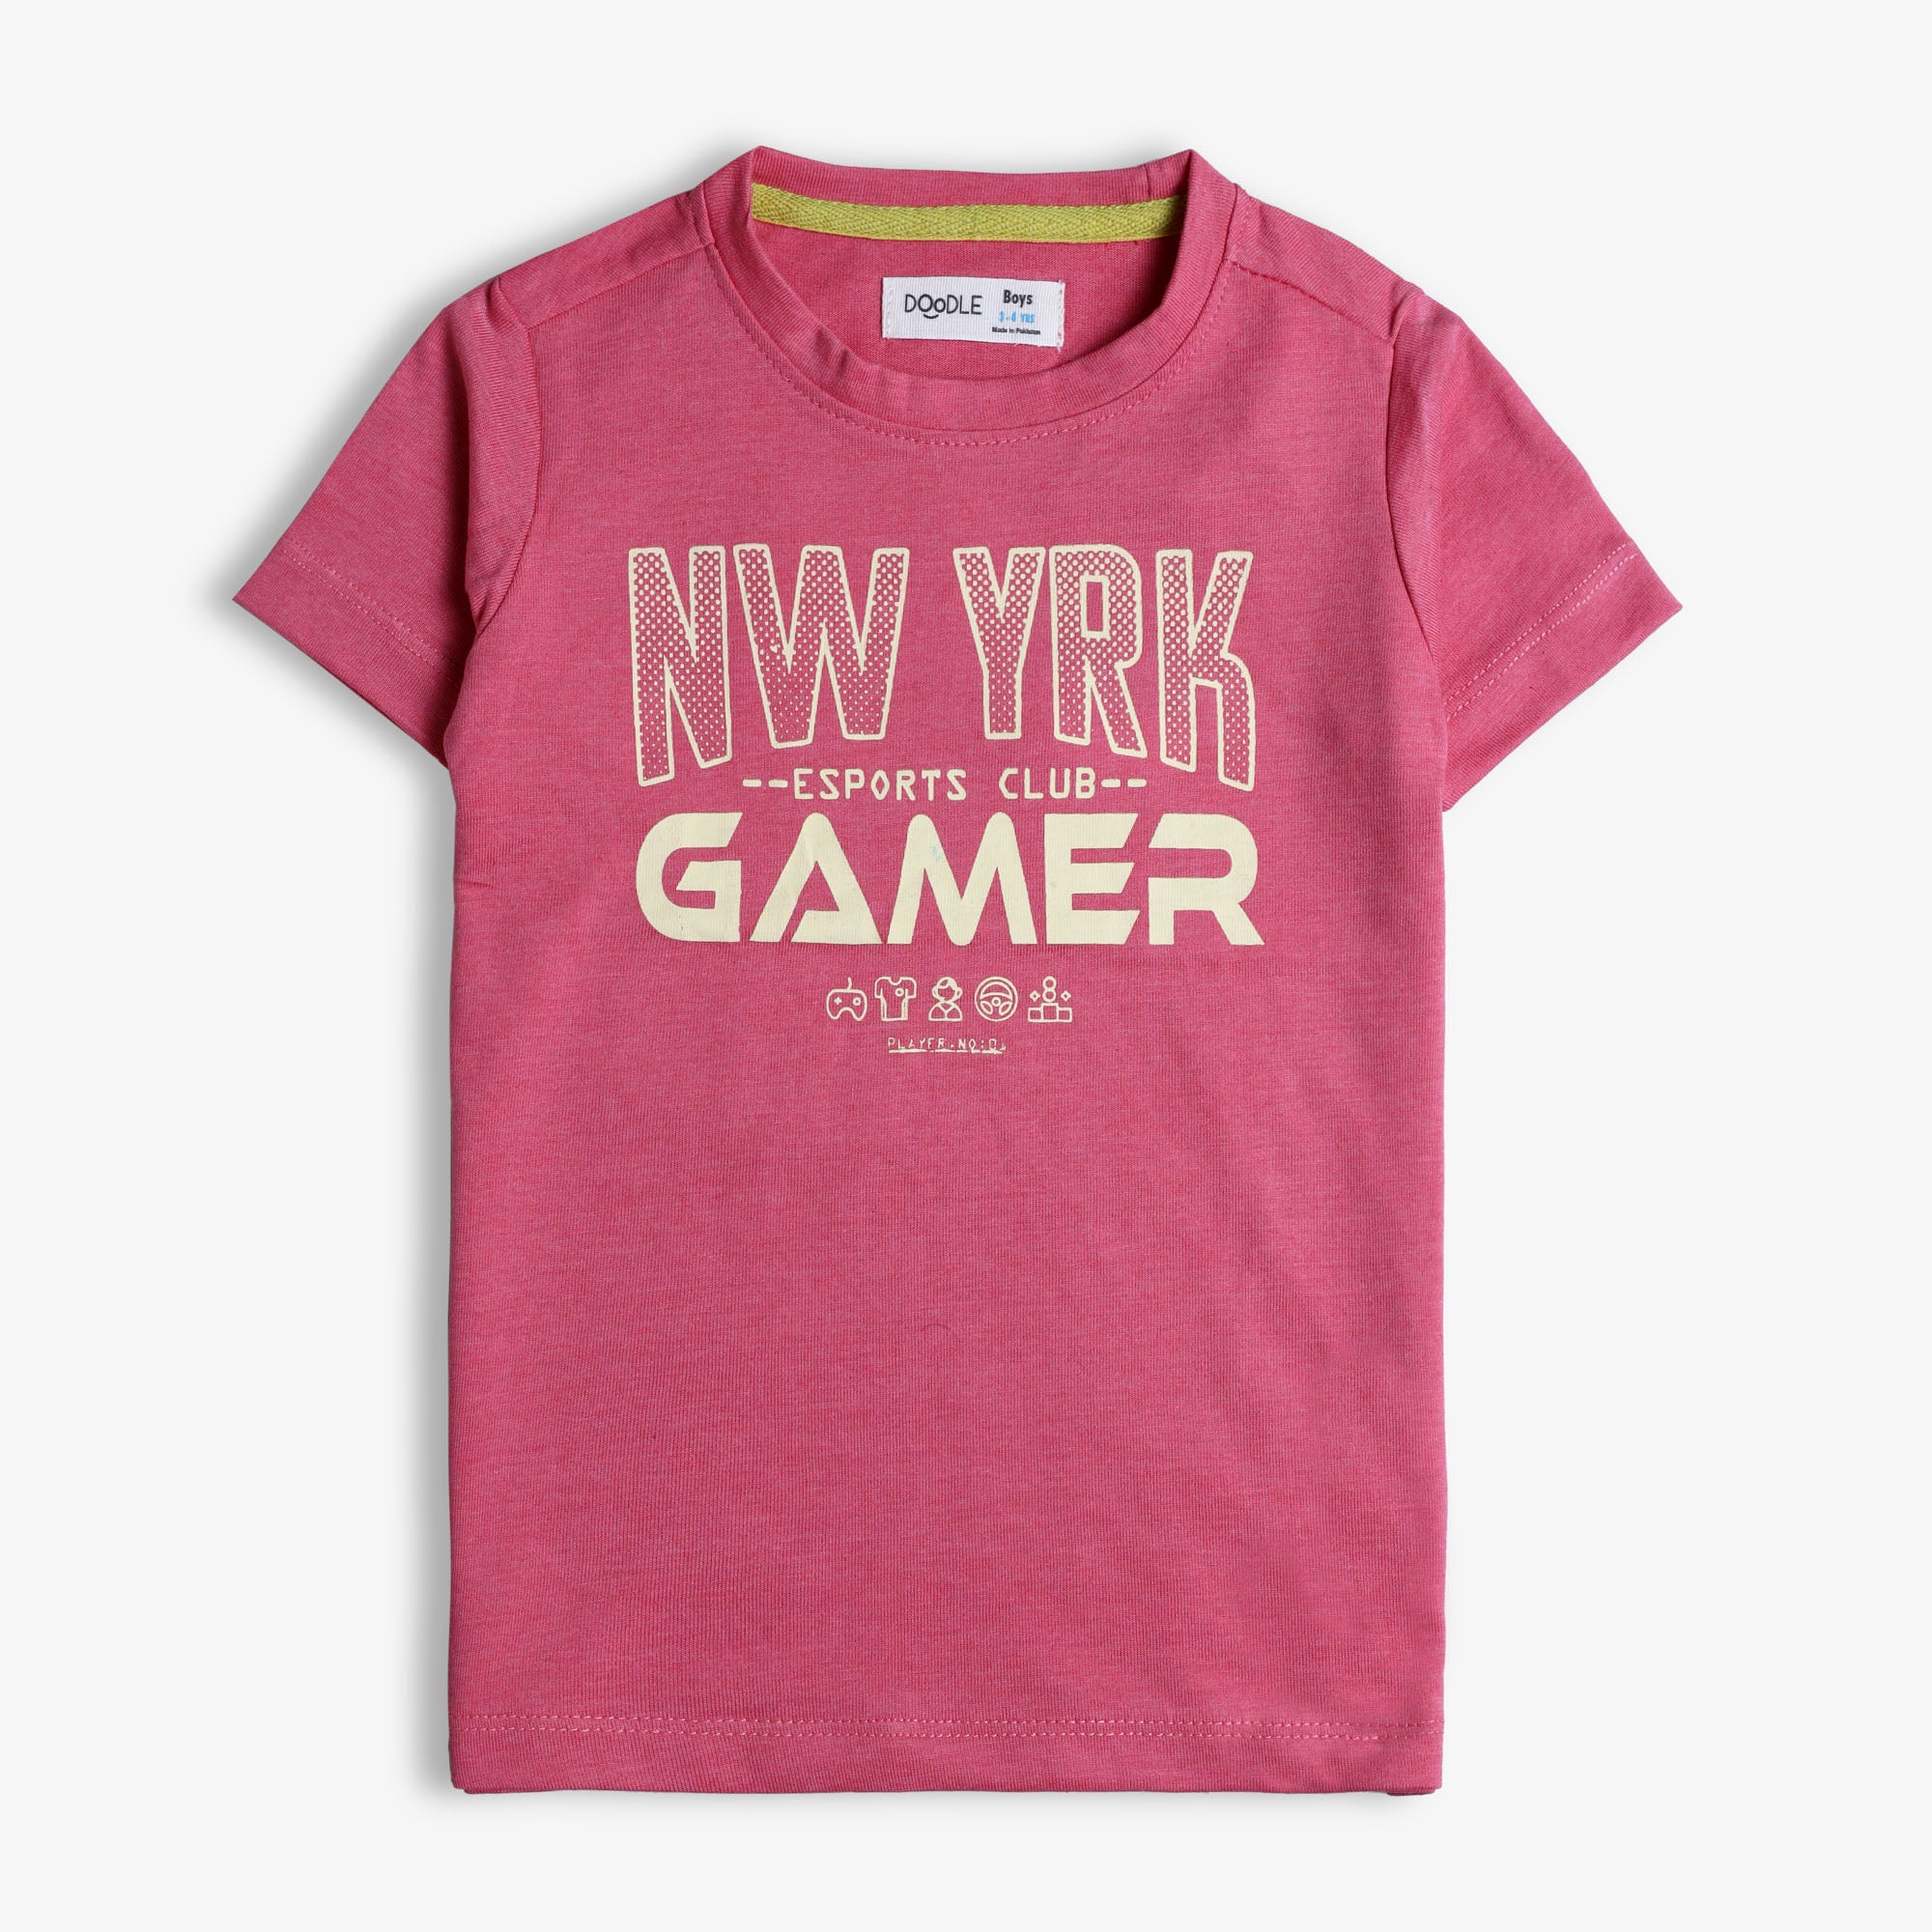 New York Gamer Tee